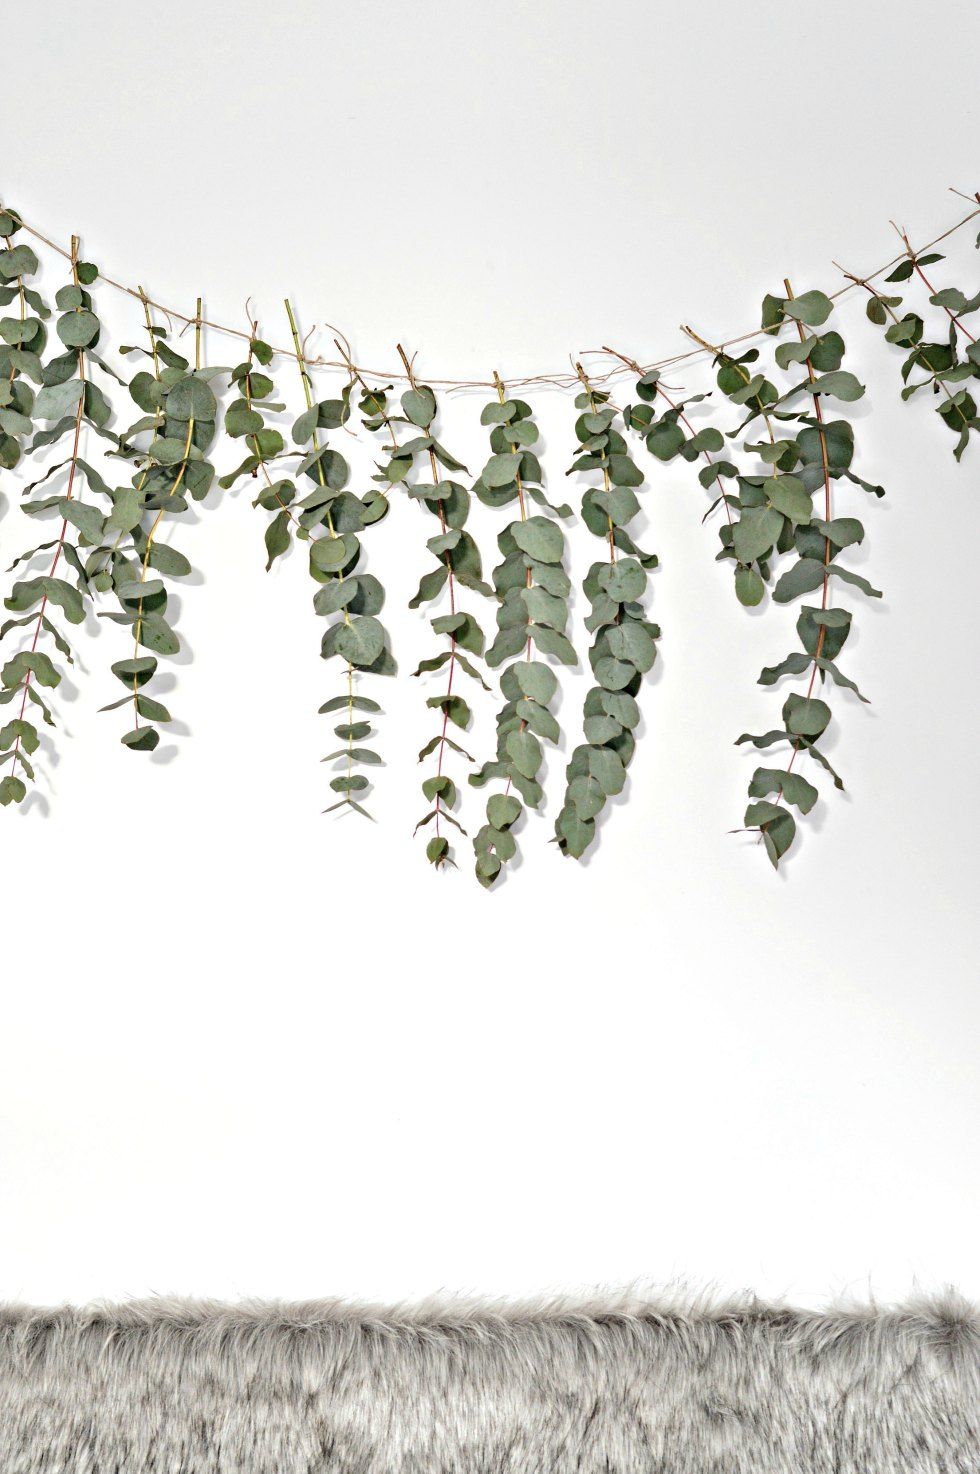 How to Grow Eucalyptus Plants - Growing Eucalyptus from Seeds